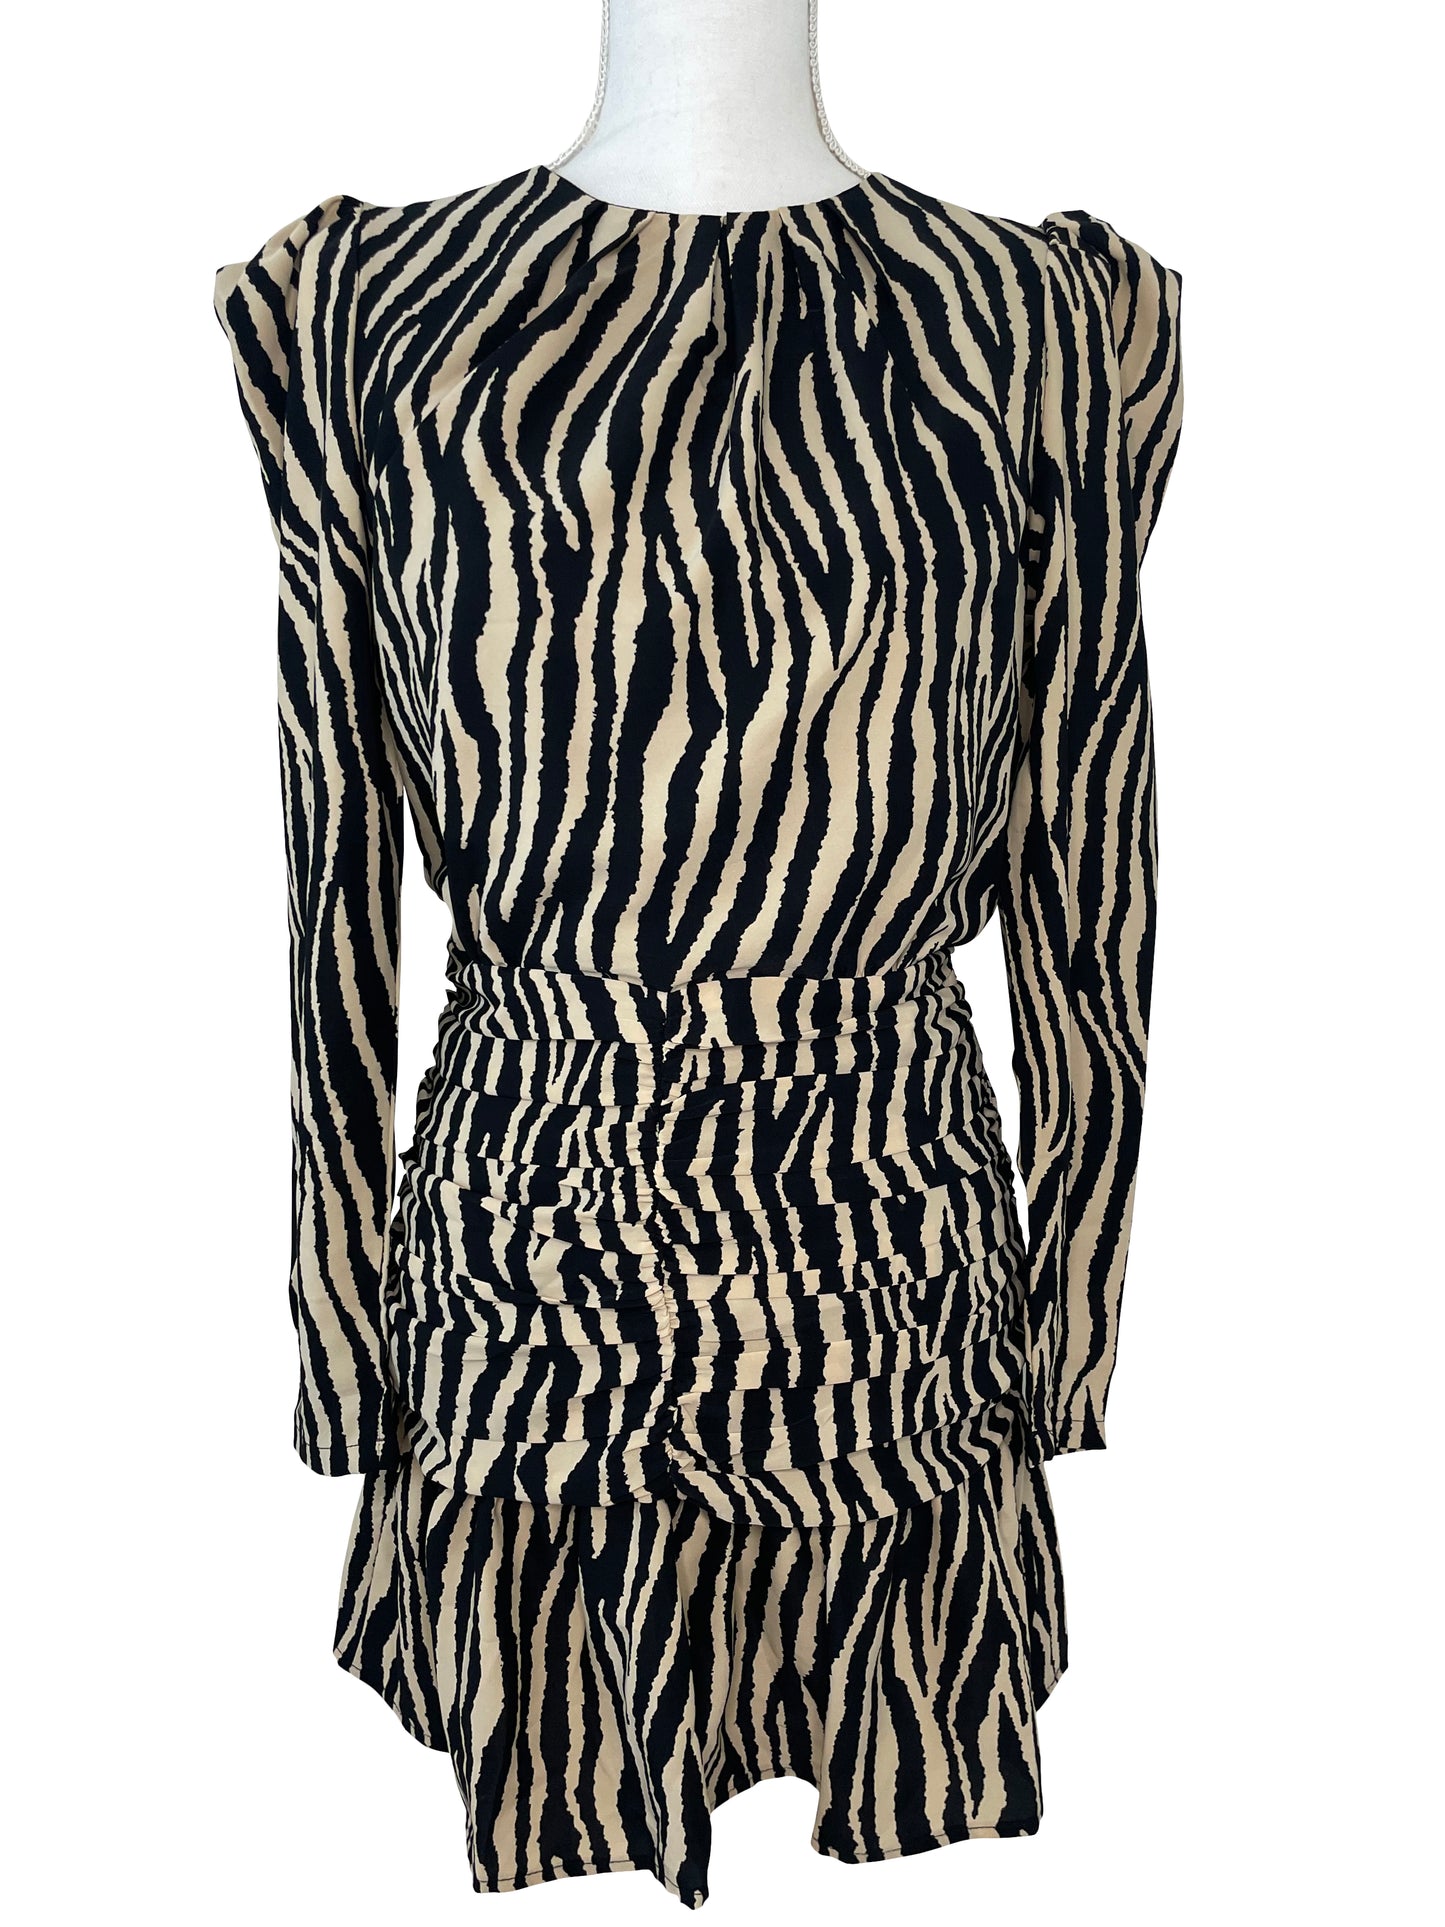 Zebra Print Shoulder Pad Dress